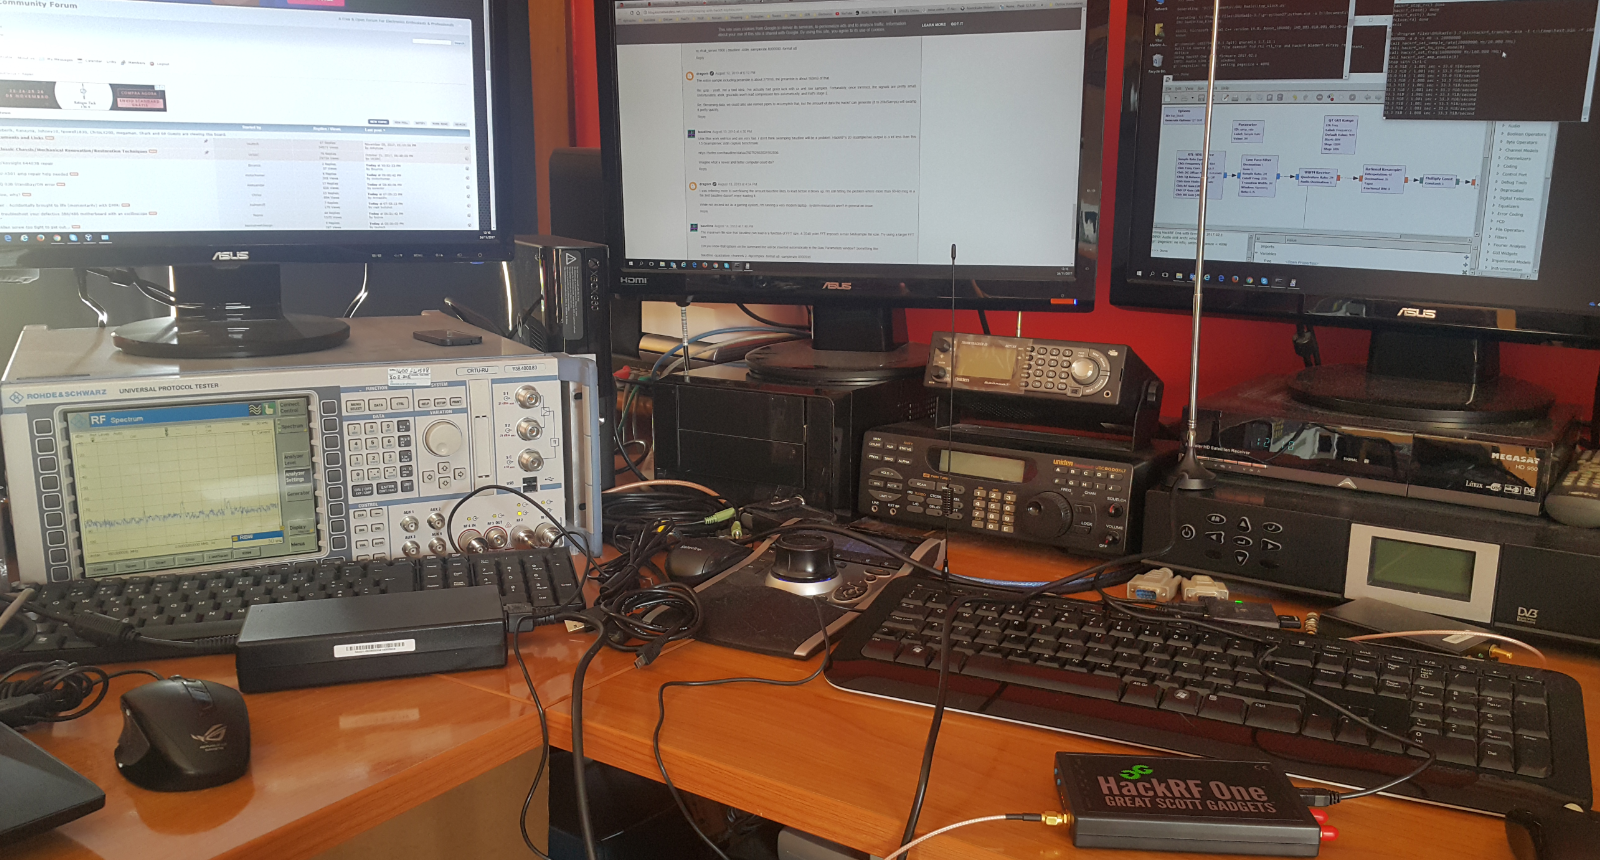 Using HackRF One and GNU Radio on Windows 10